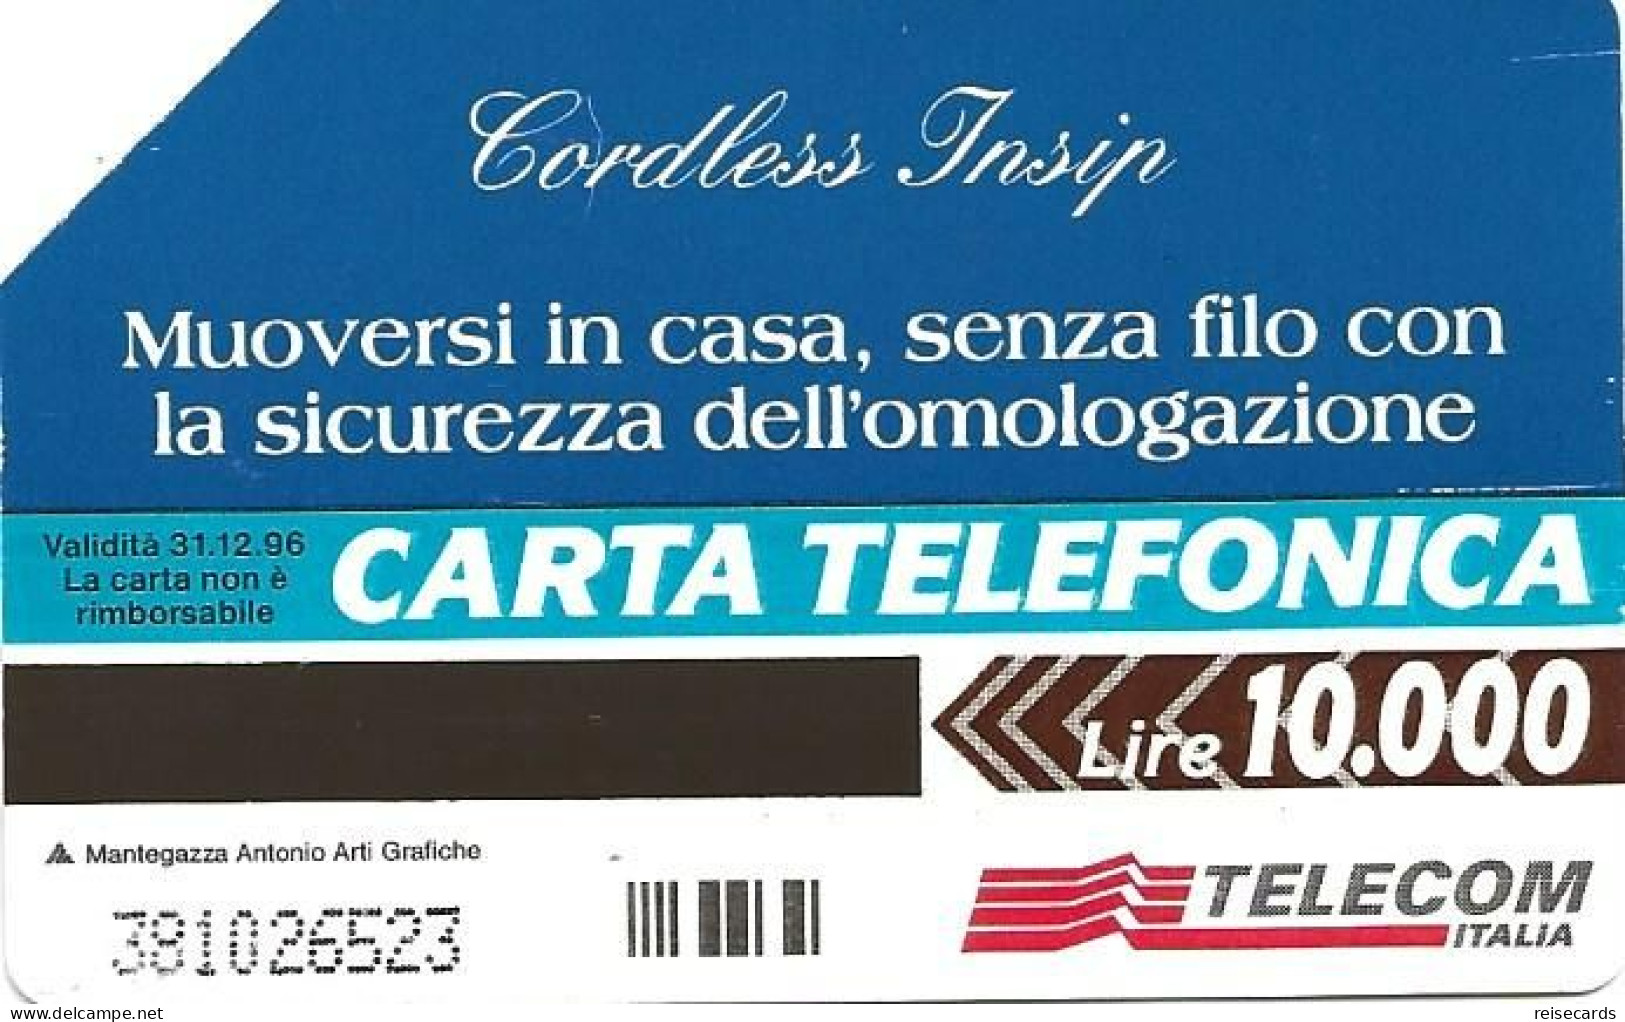 Italy: Telecom Italia - Cordless Insip - Openbare Reclame